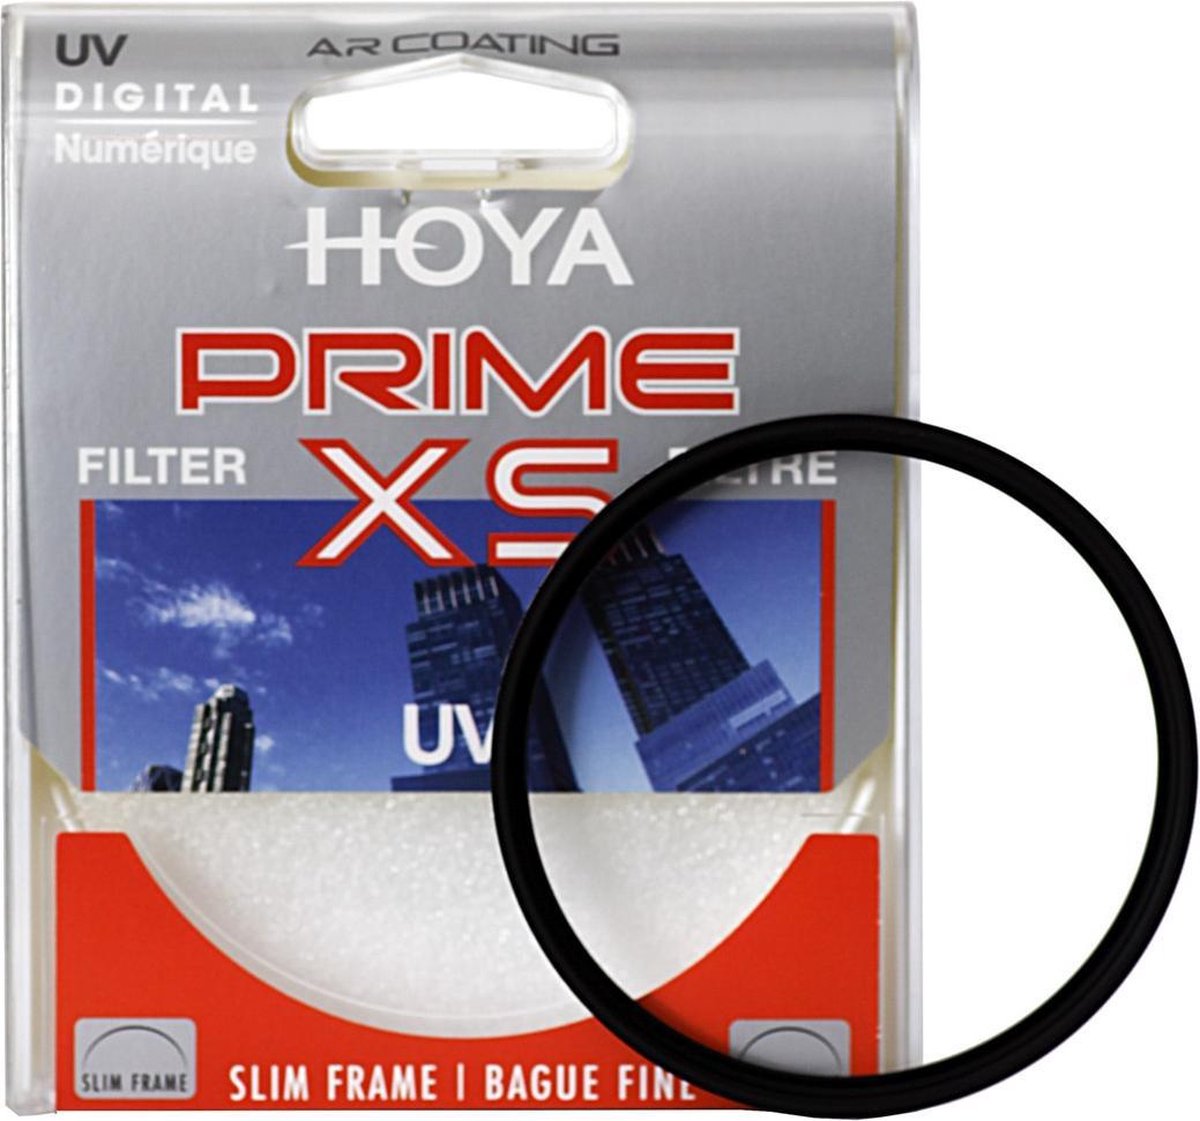 Hoya PrimeXS Multicoated UV filter 55.0MM